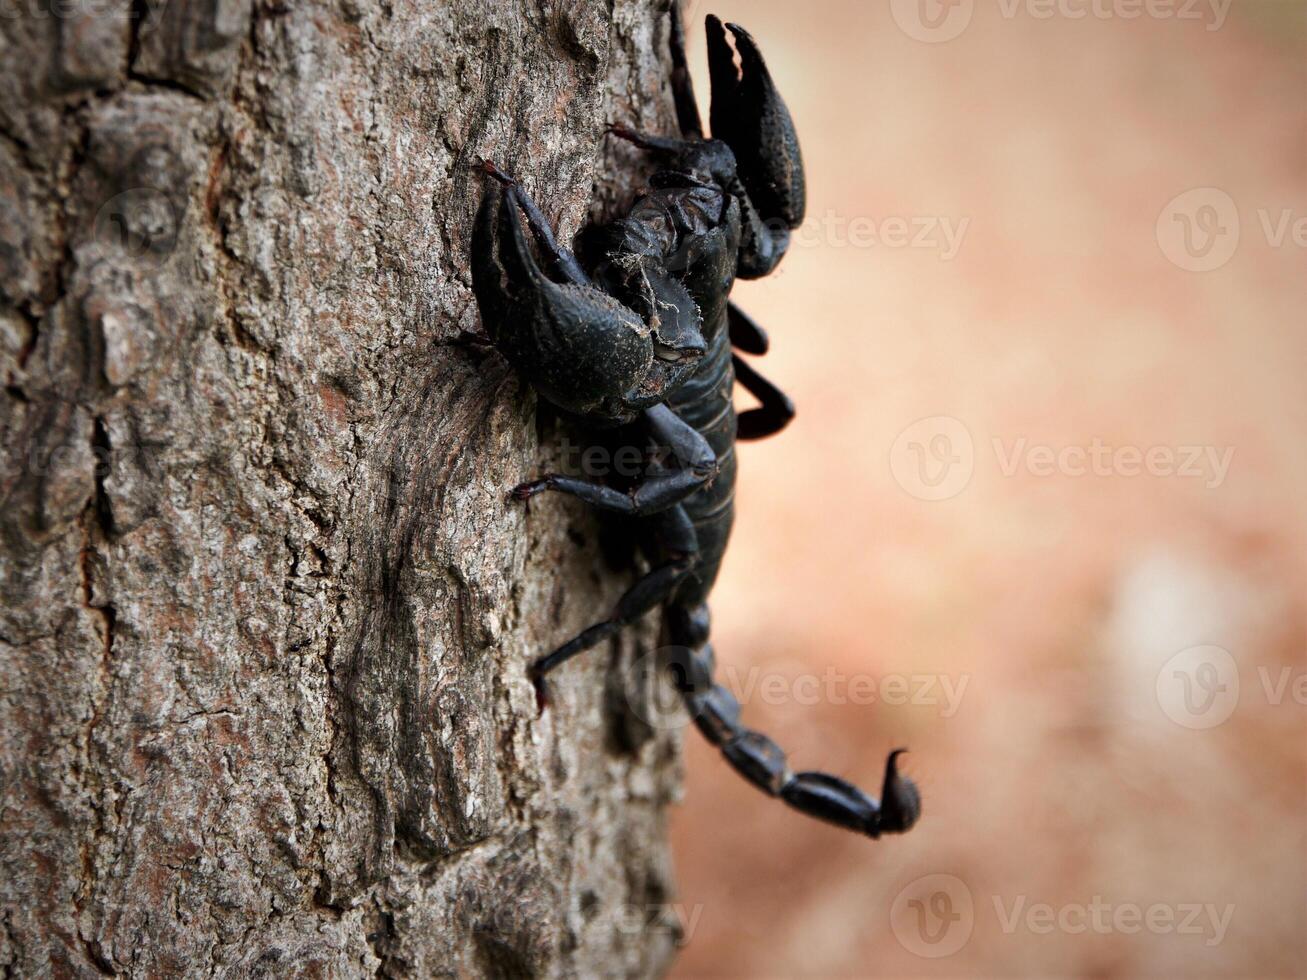 Scorpion on a tree trunk photo